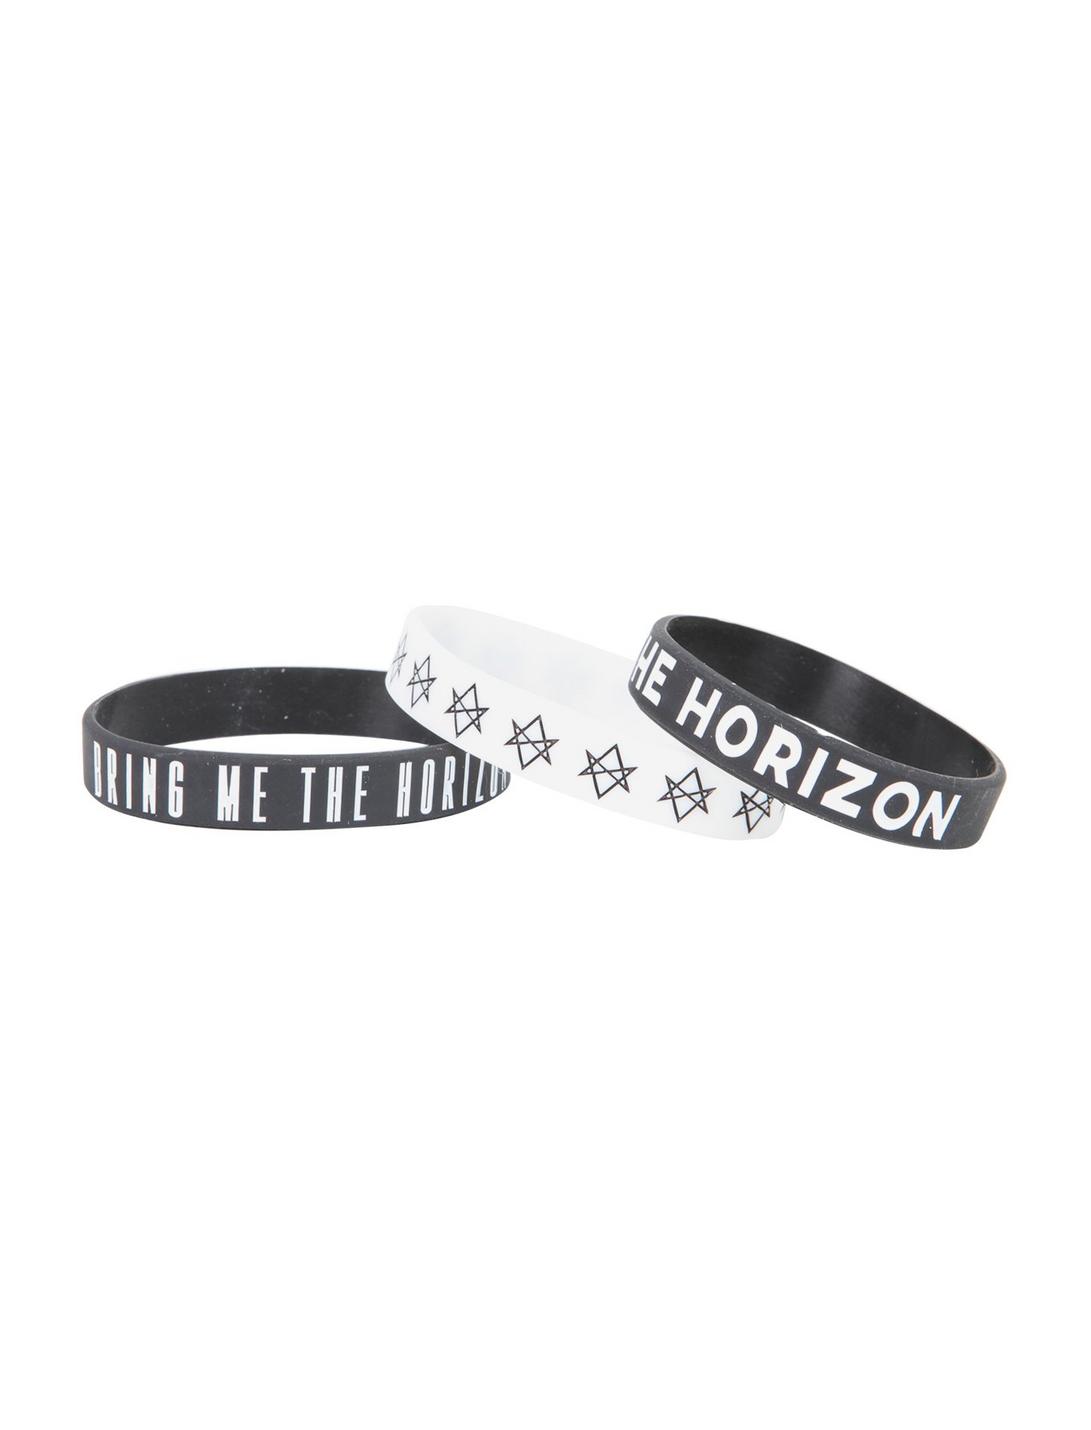 Bring Me The Horizon Saved My Life Rubber Bracelet Set, , hi-res